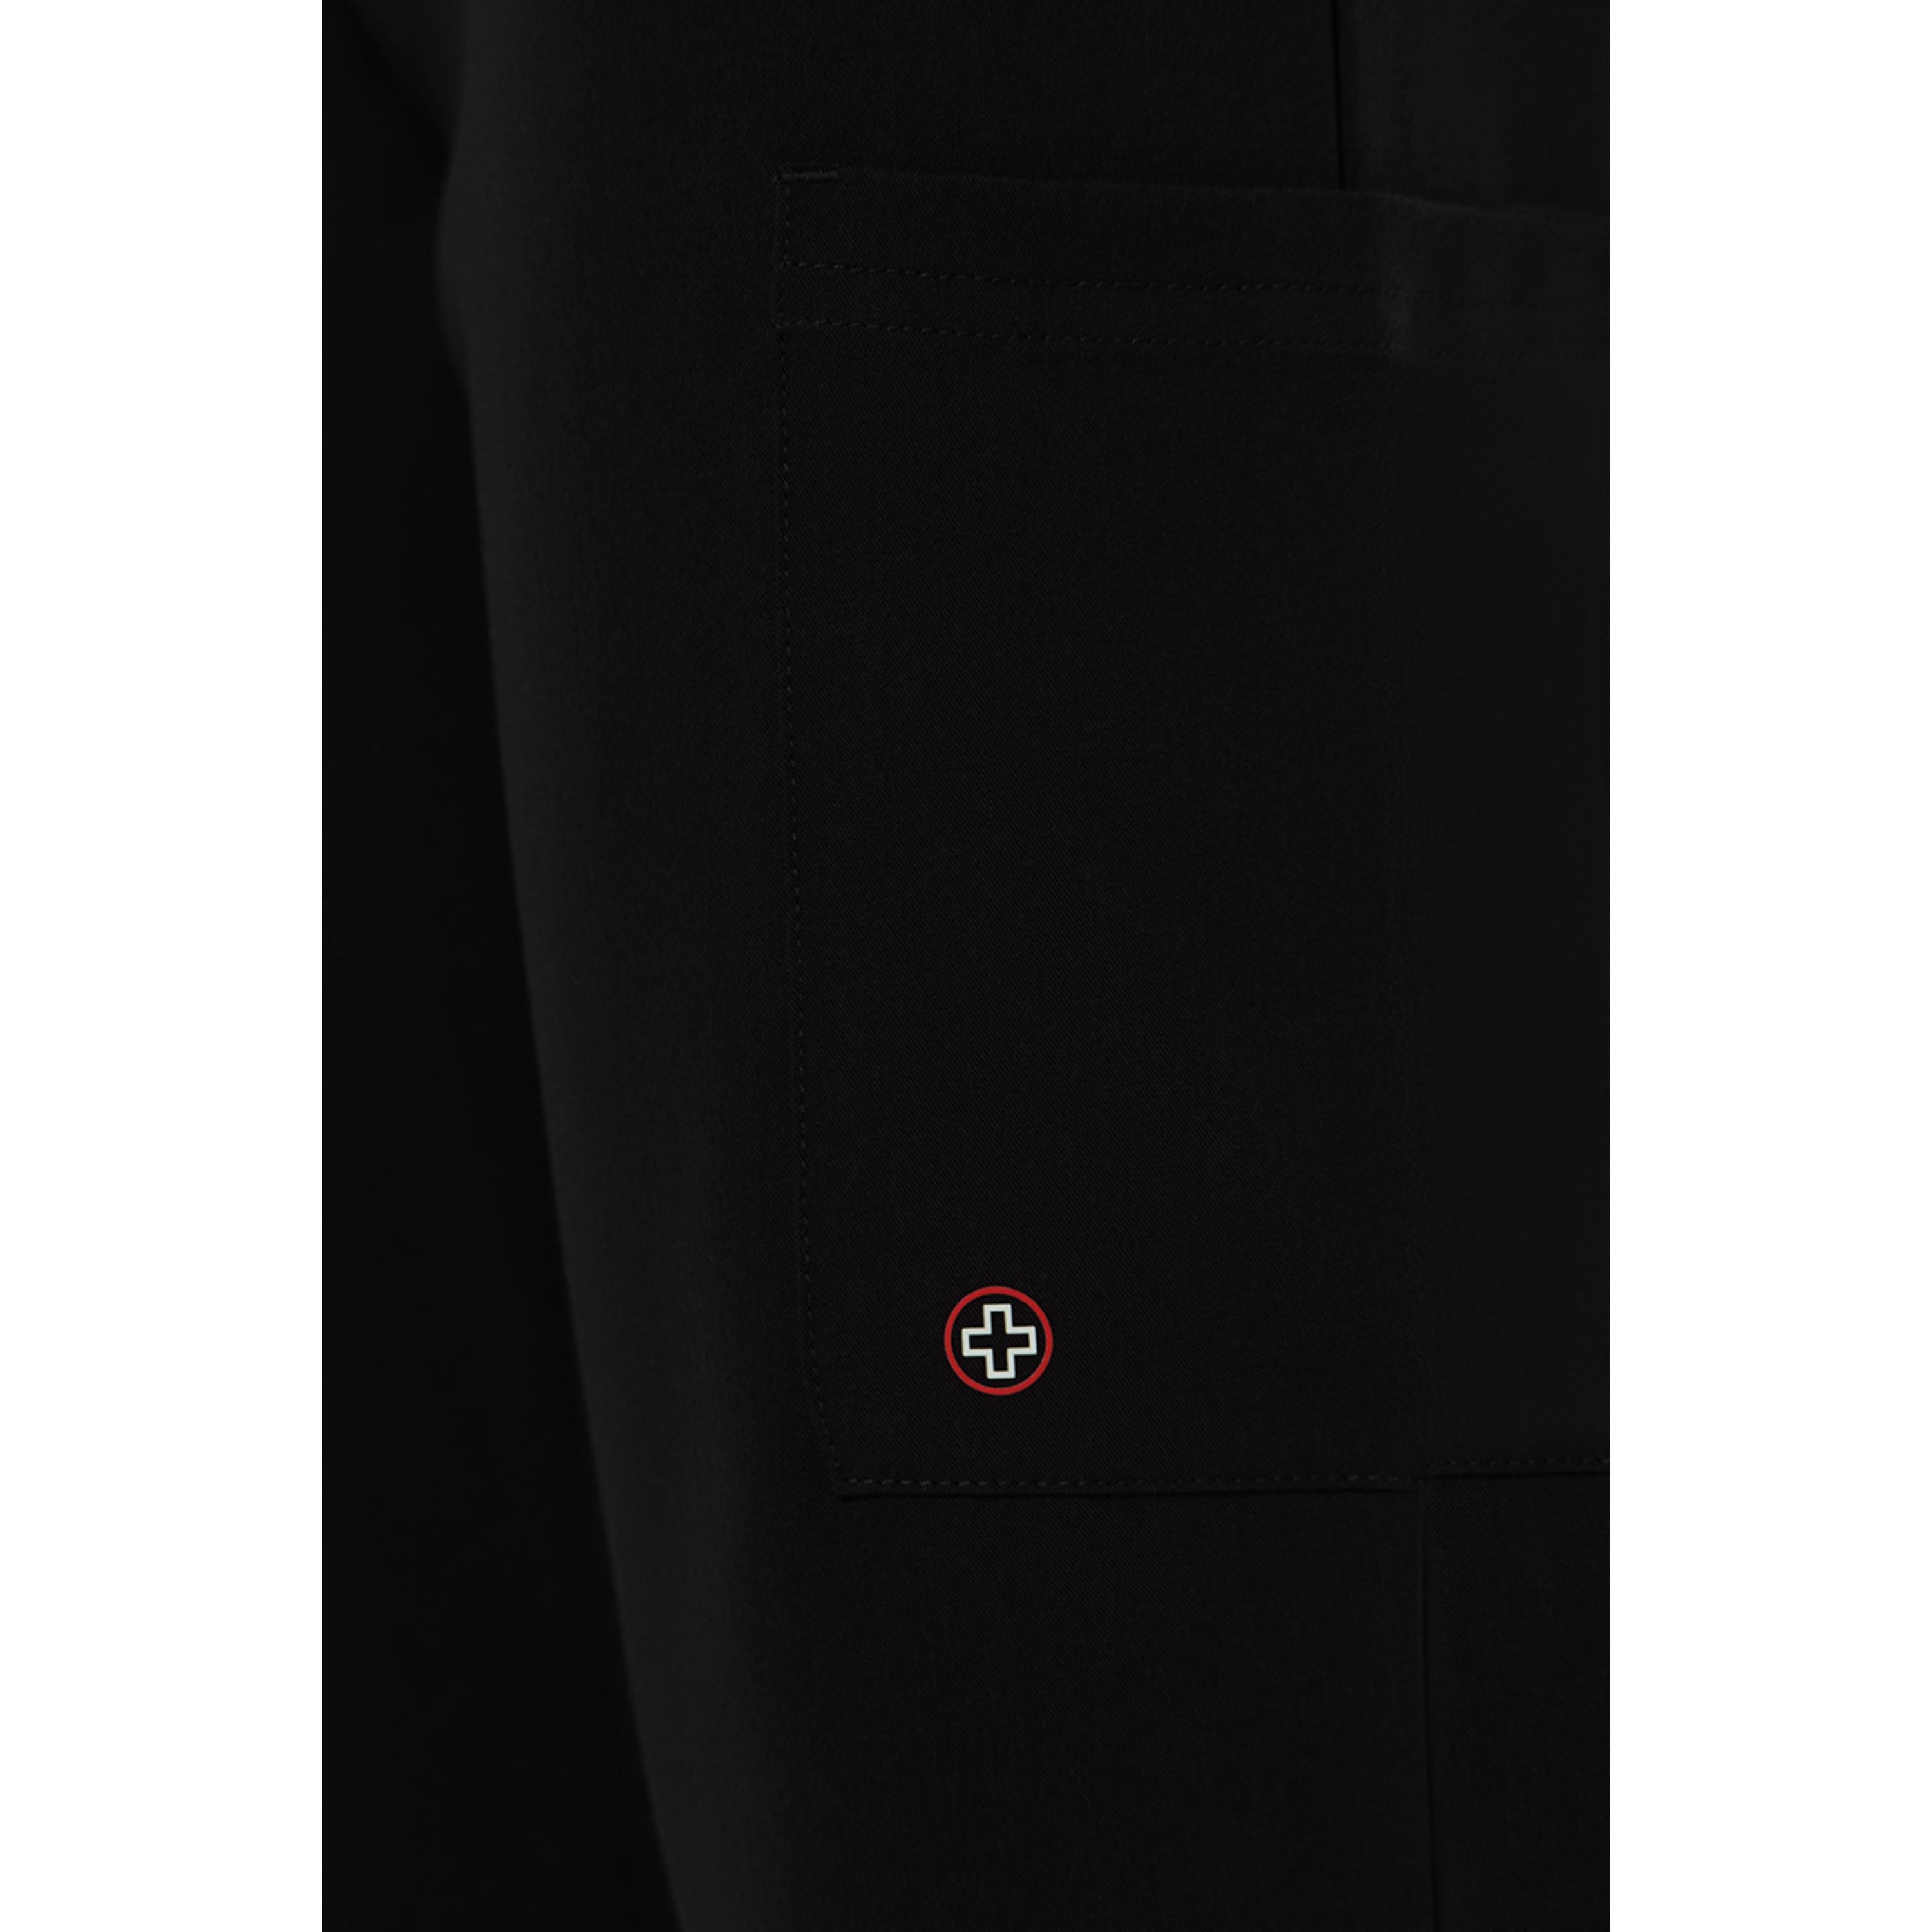 V-TESS Slim Pants 370P Petite Inseam: 26 1/2" Petite "SALE!"